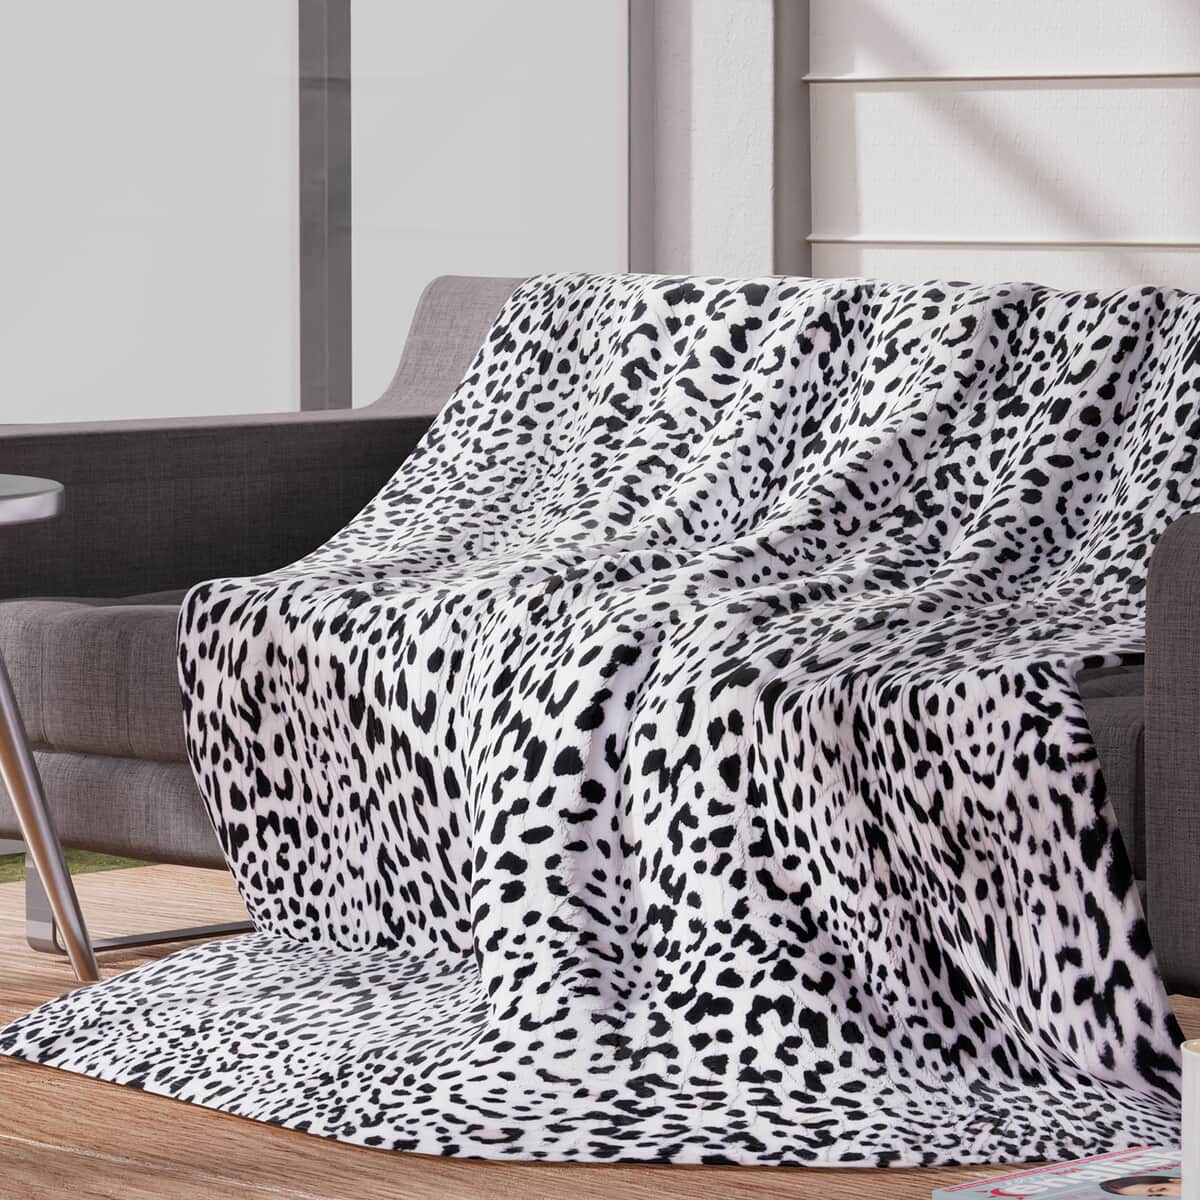 Homesmart White, Black & Pink Striking Leopard Pattern Microfiber Single Layer Flannel Blanket image number 1